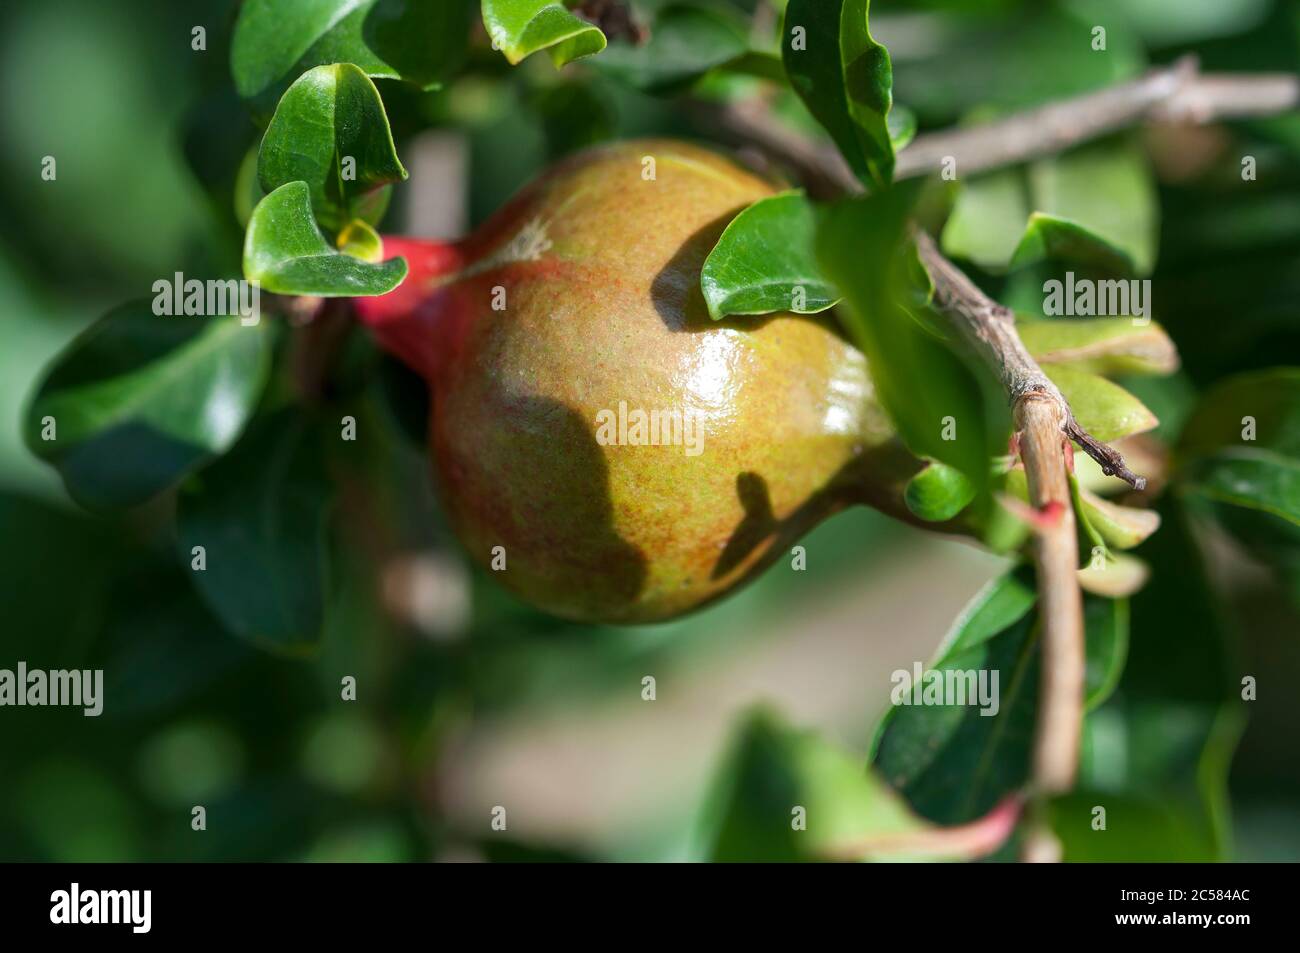 Green pomegranate fruit. A small, unripe pomegranate. An unripe pomegranate hanging from a branch. Stock Photo